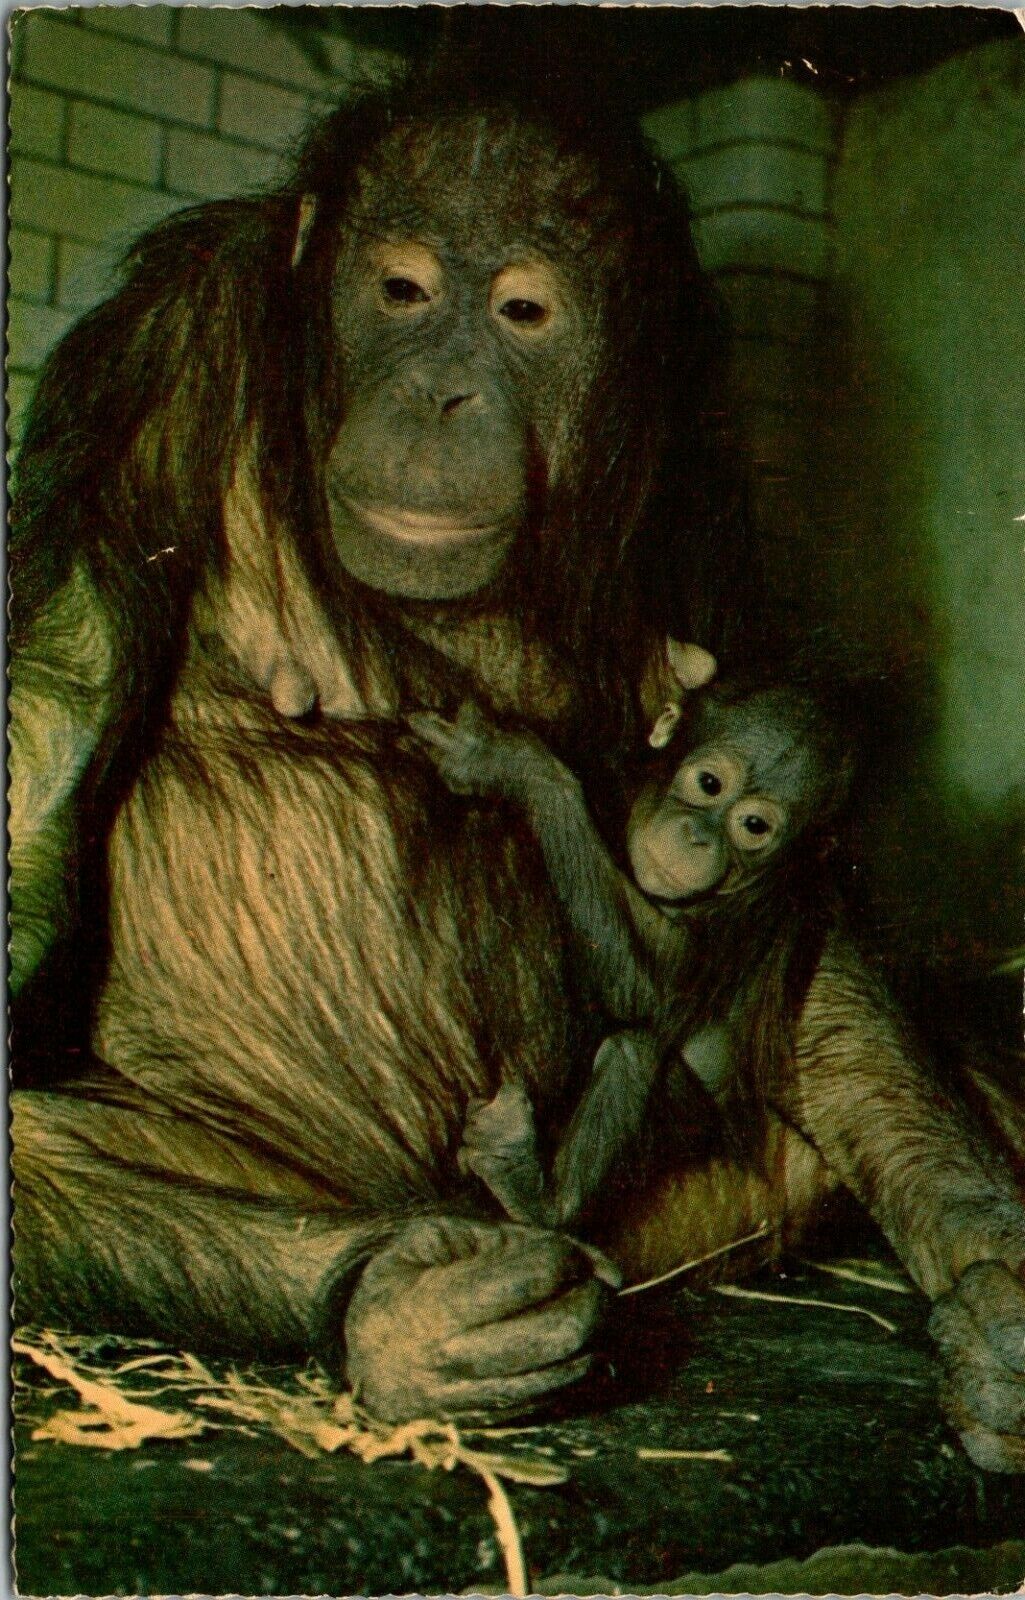  Orangutan & Her Baby London Zoo Circa 1964 Vintage Zoological Society Postcard 